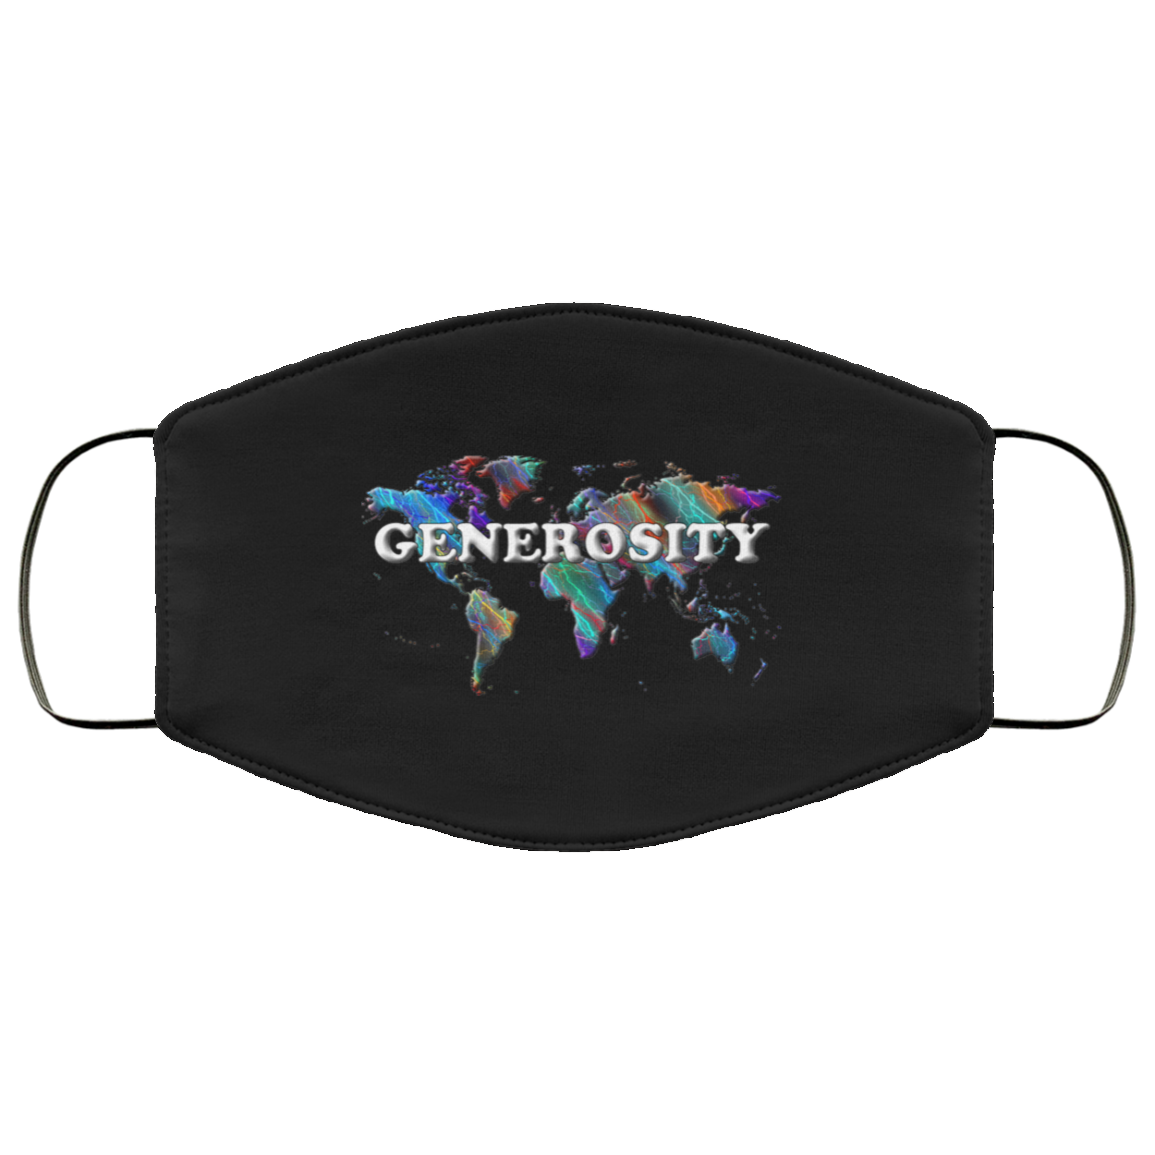 Generosity 2 Layer Protective Mask